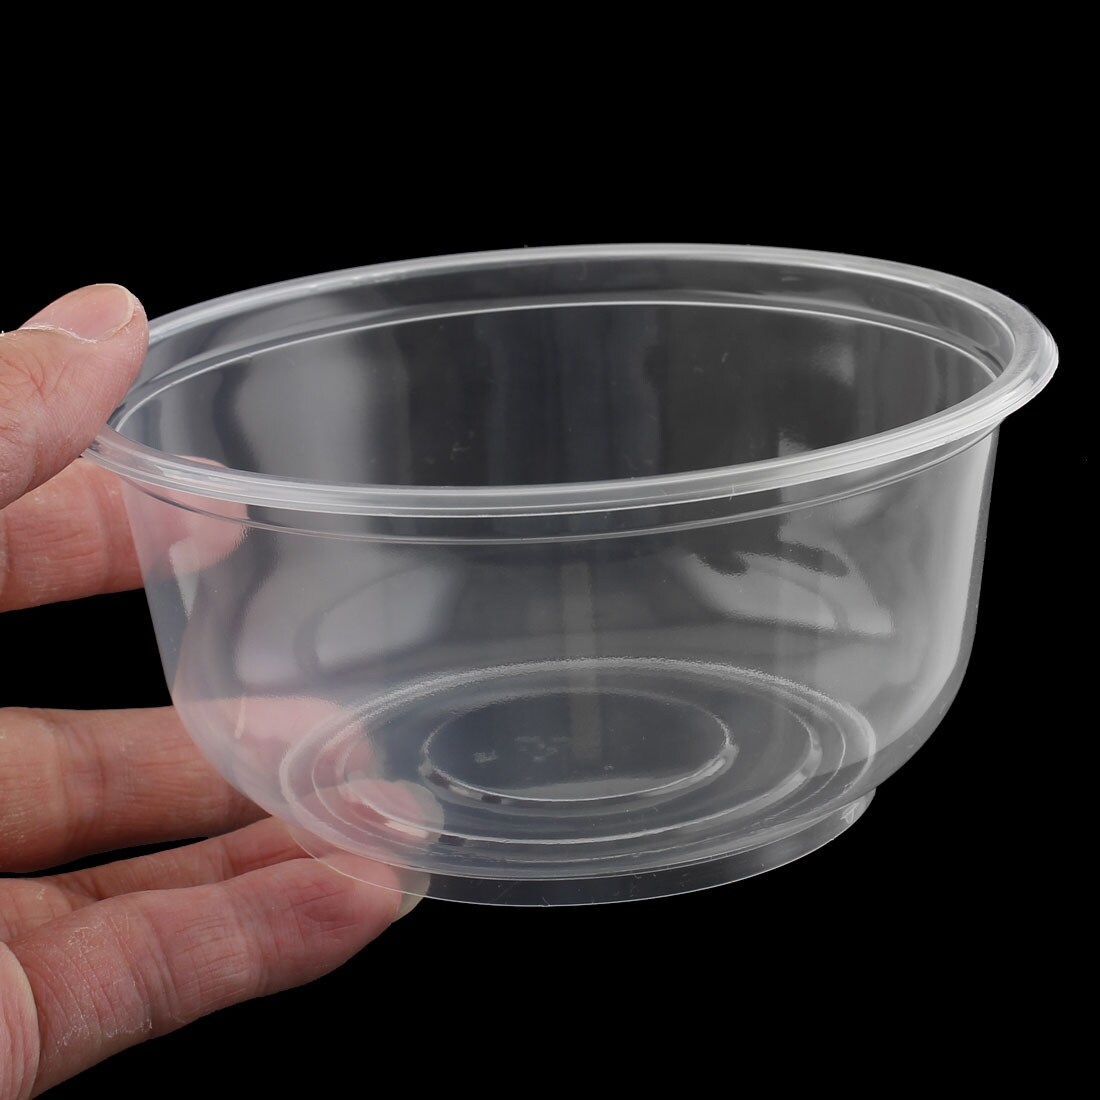 Kitchen Picnic Plastic Disposable Round Shape Rice Bowl 360ml 10 Pcs -  Clear - 4.7x2.9x2.2(Upper D*Bottom D*H) - Bed Bath & Beyond - 28769450